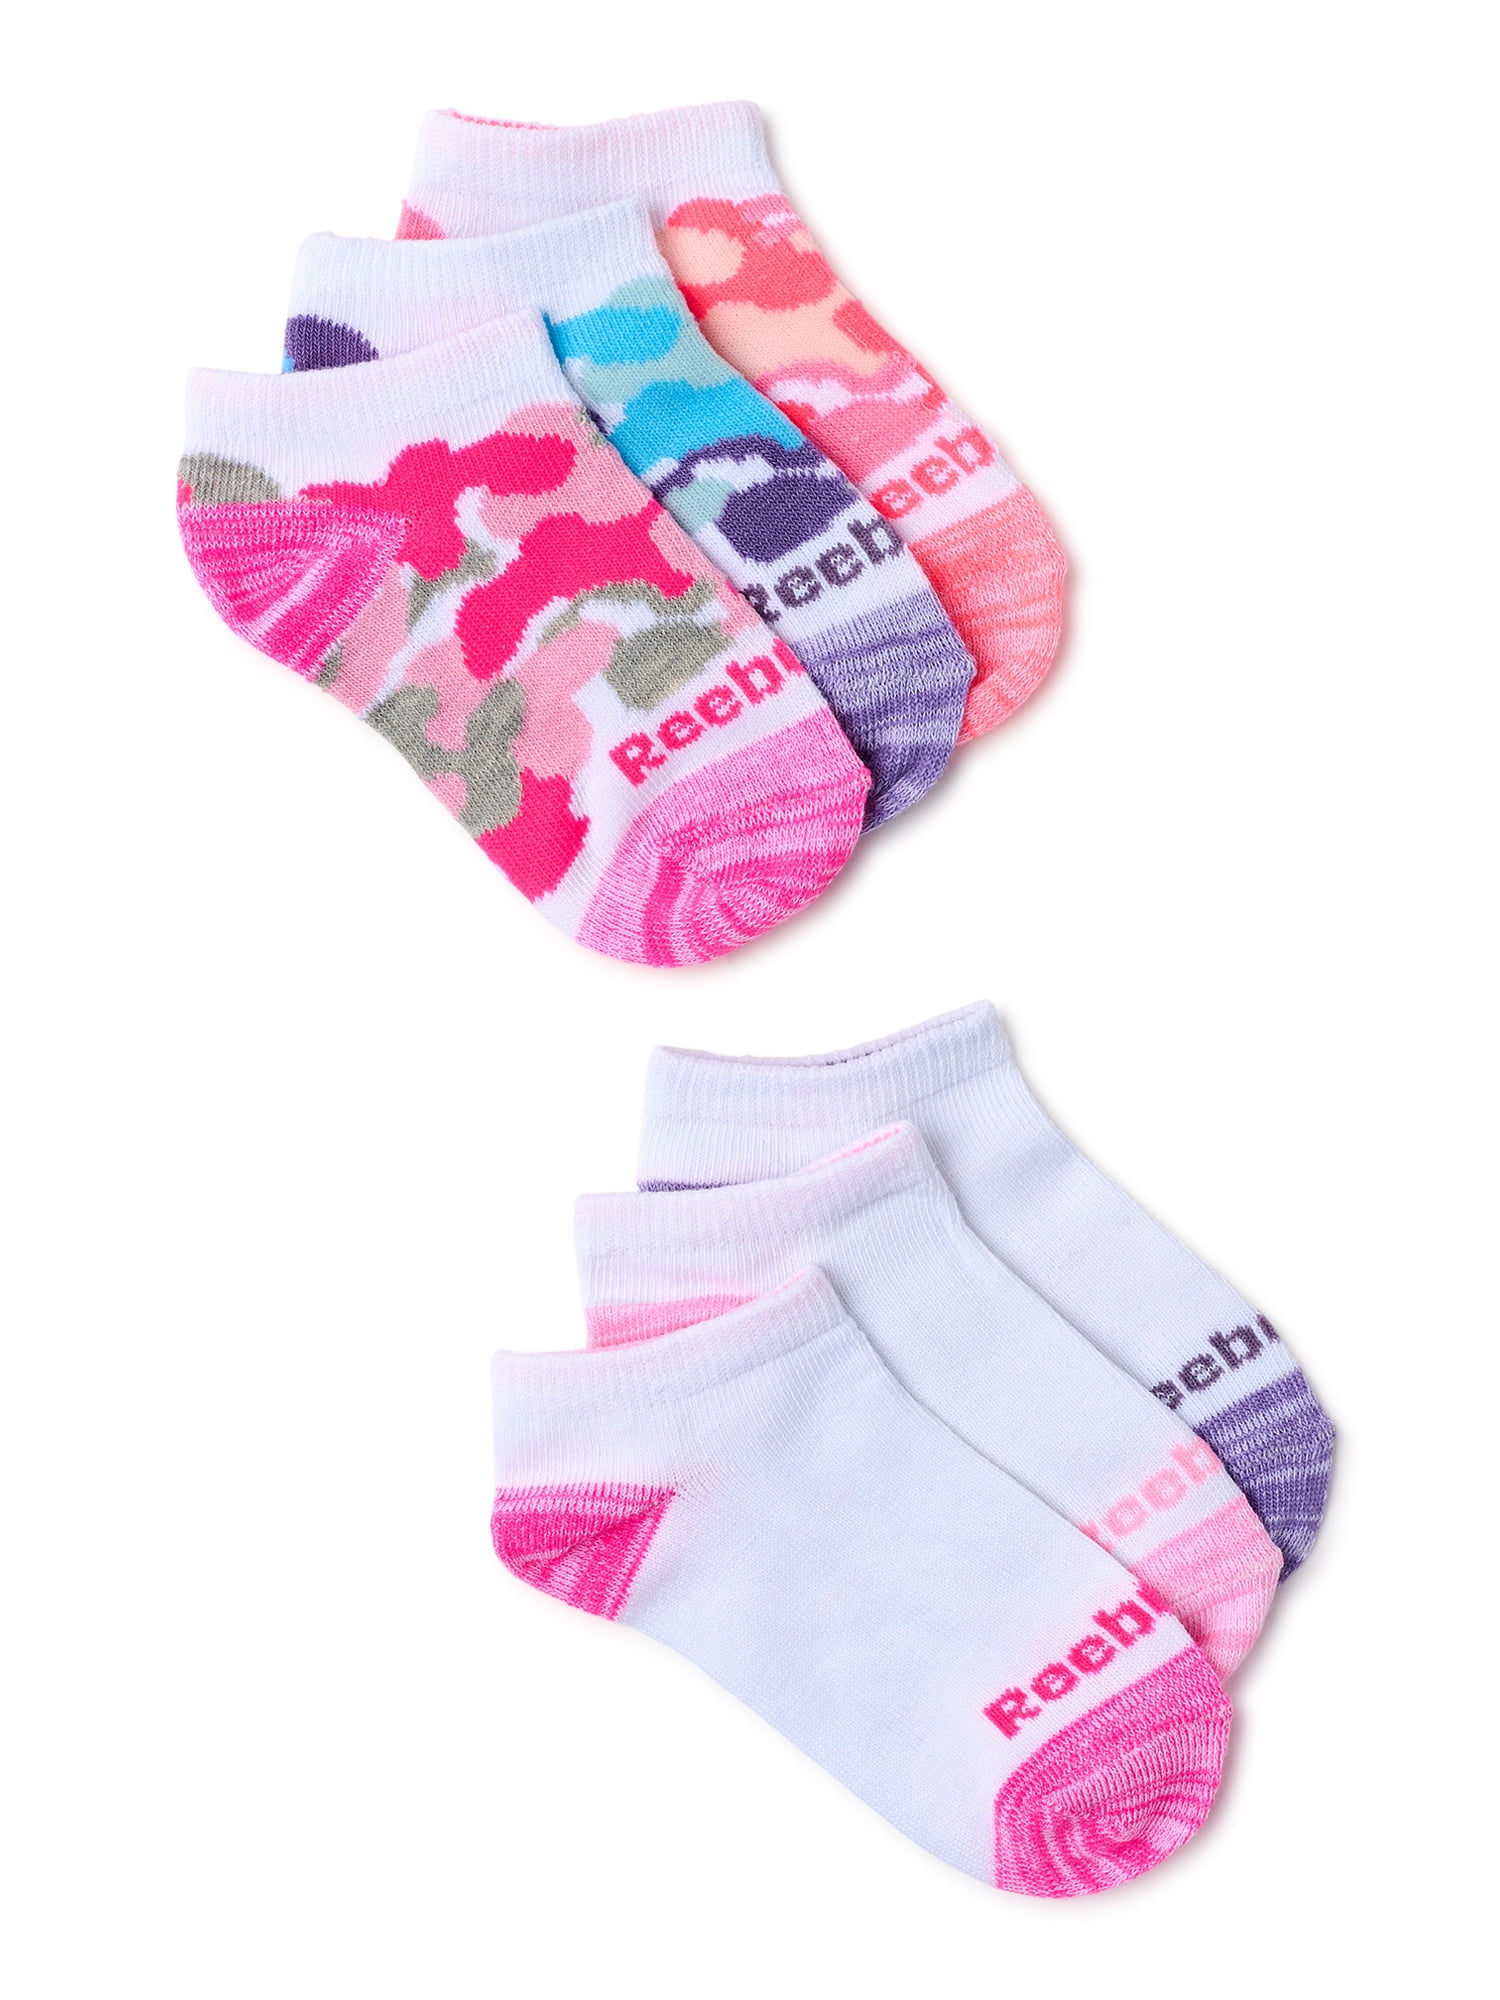 Reebok Girls Pro-Series Low Cut Socks, Medium, 6-Pack